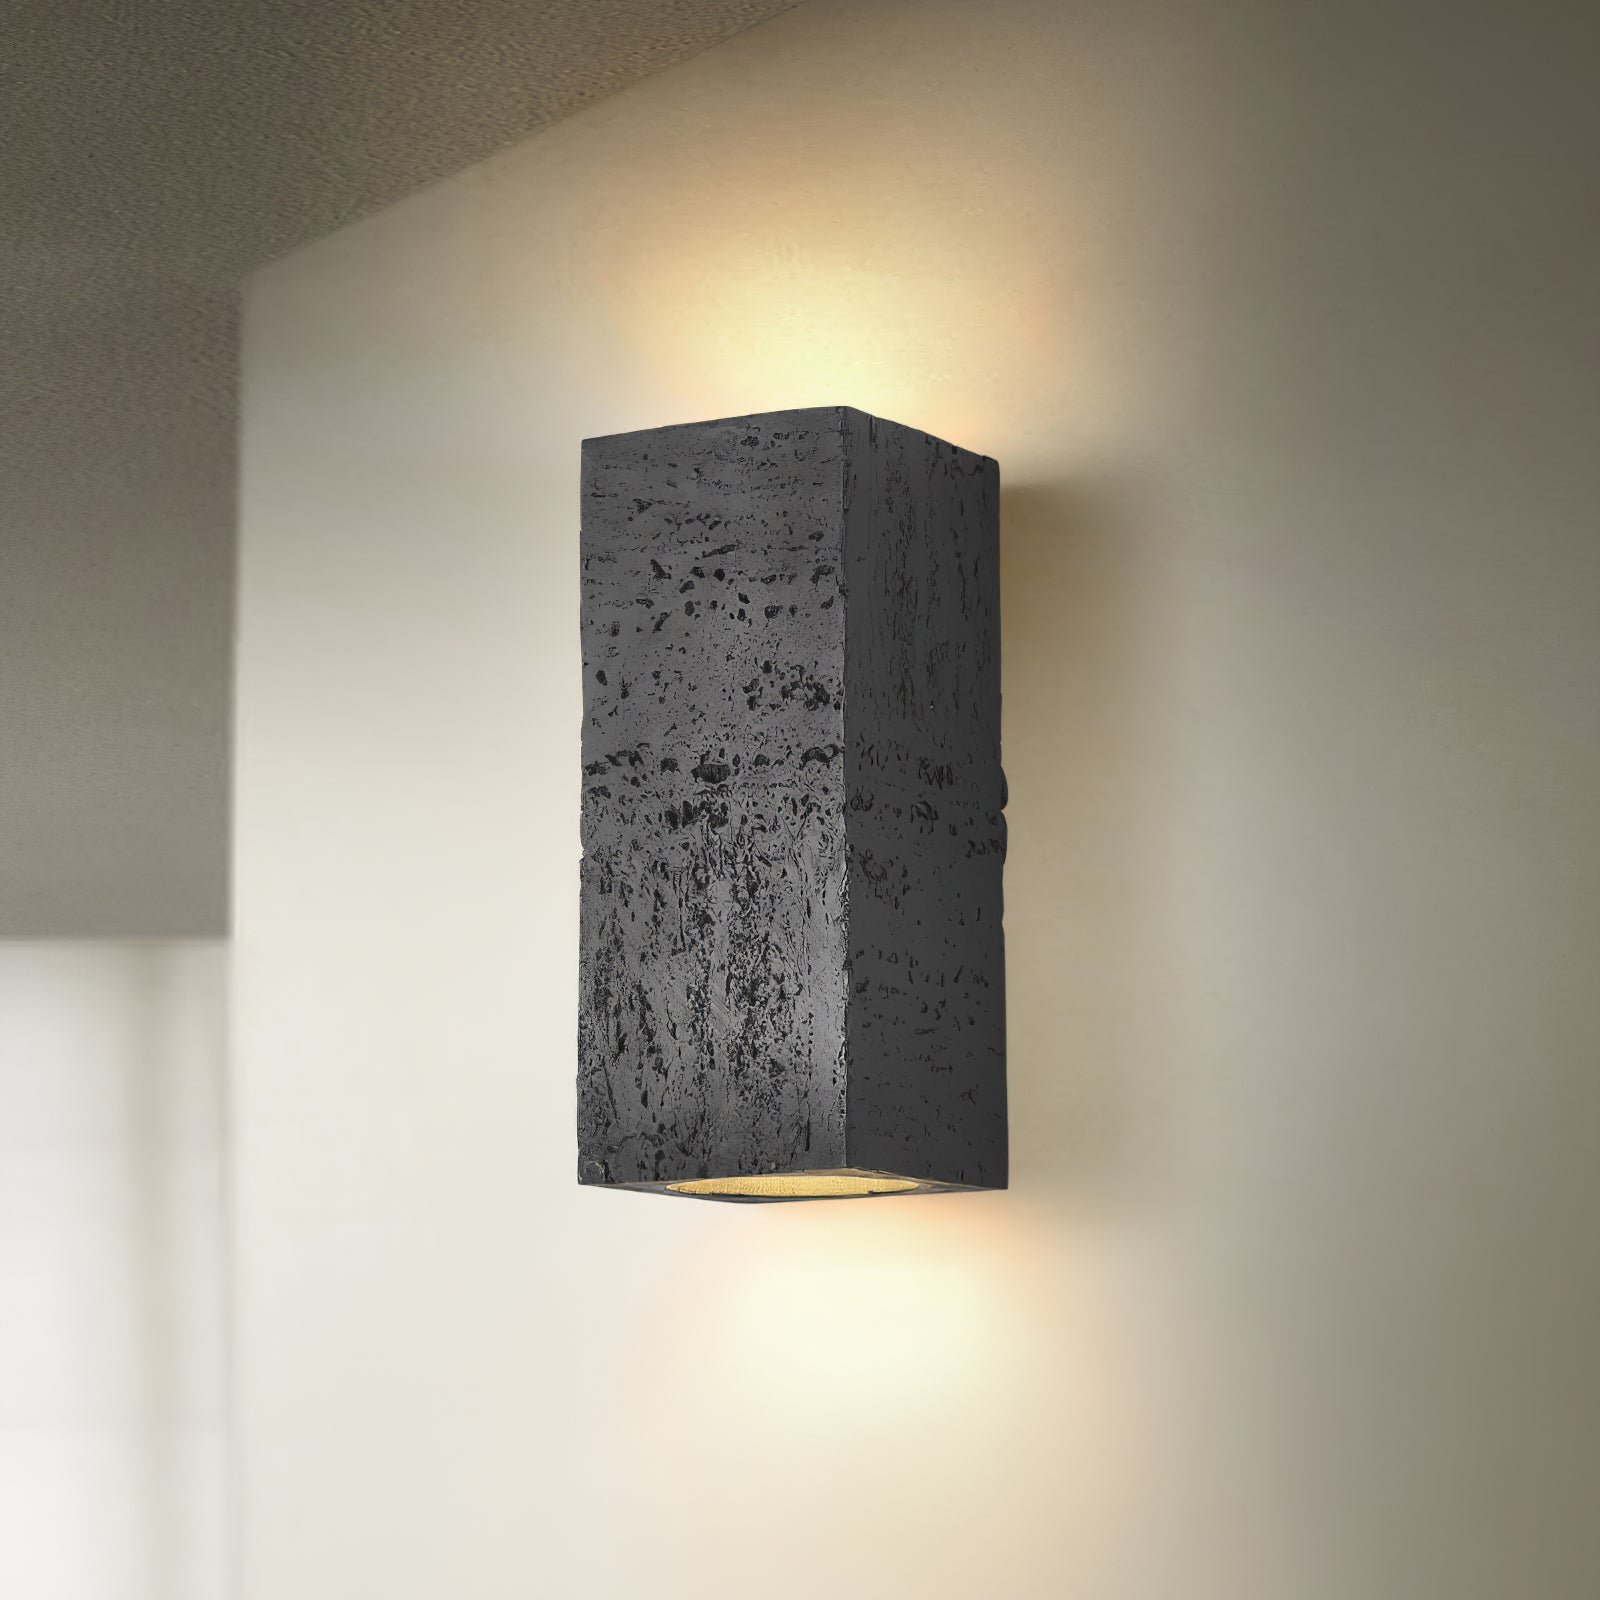 Black Bricks Wall Lamp - Diameter 3.9" x Height 9" (10cm x 23cm)